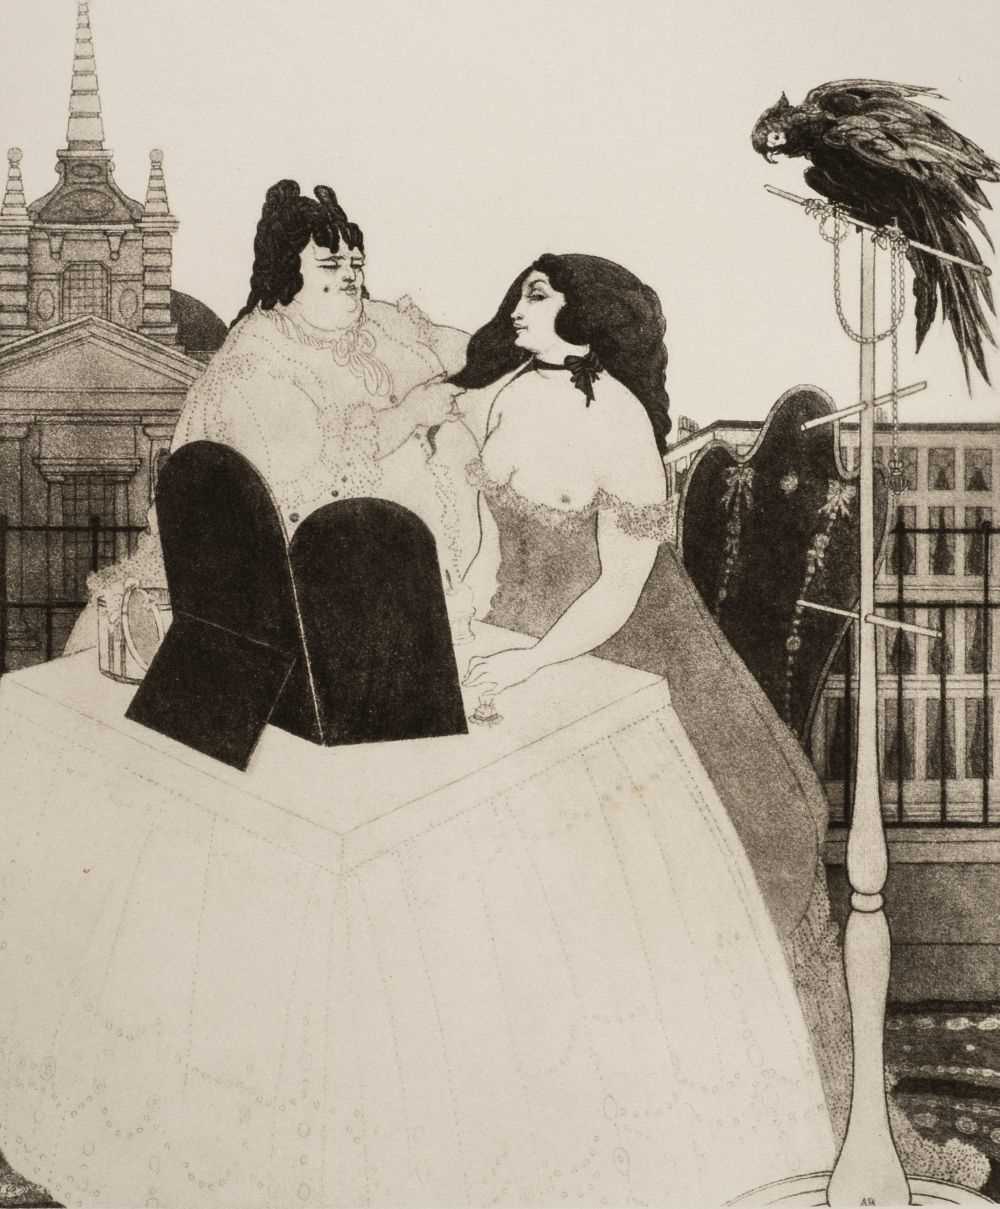 Lot 601 - Beardsley (Aubrey). Six Drawings illustrating Mademoiselle de Maupin, 1898